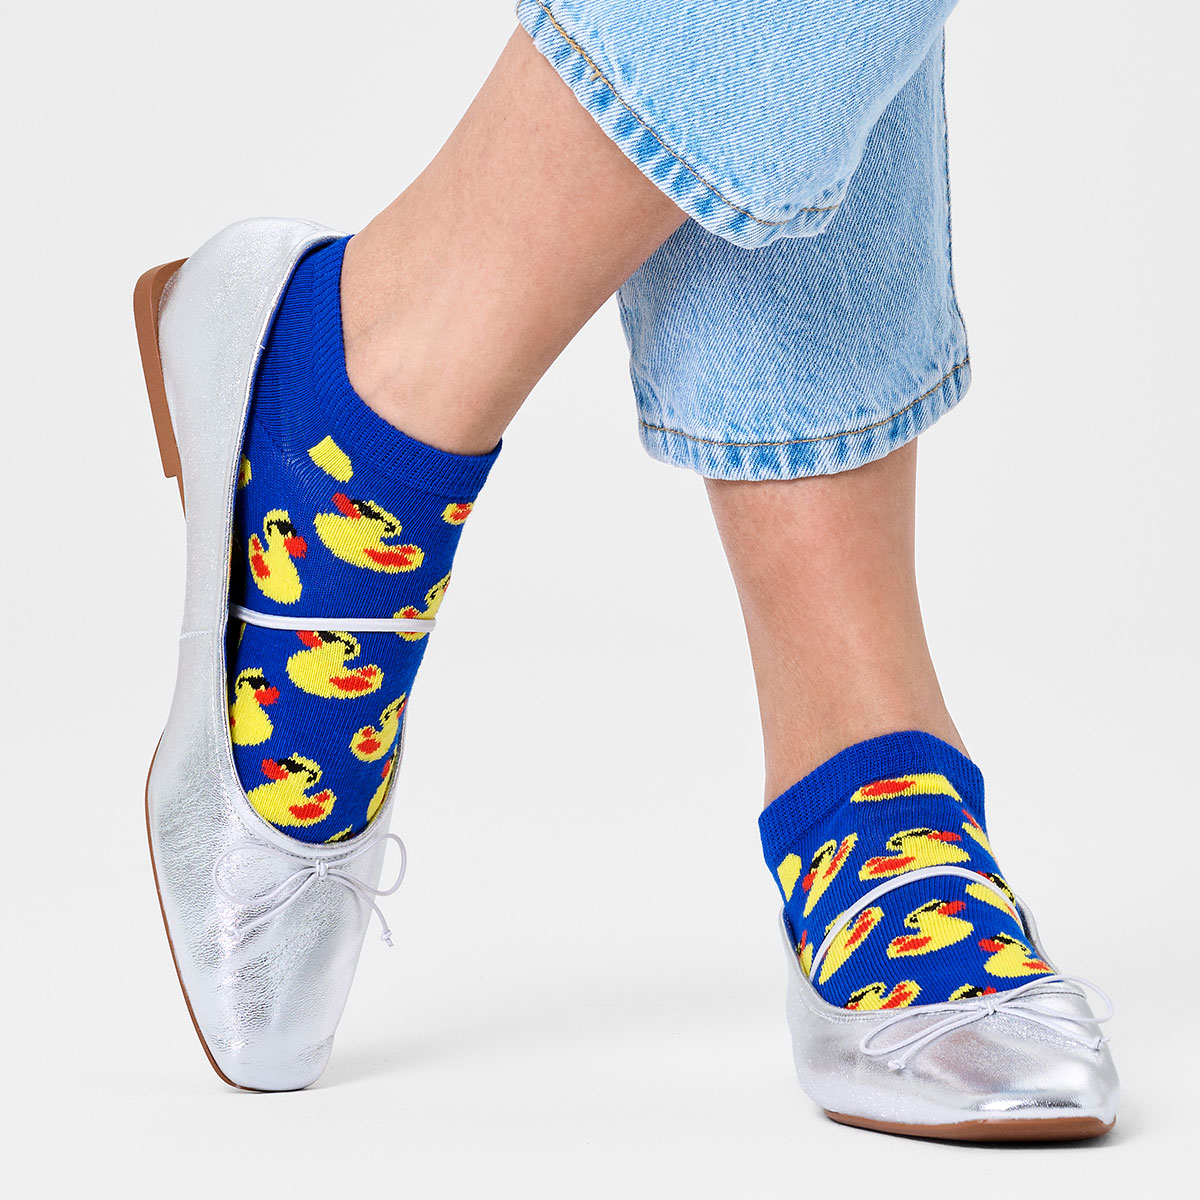 【24SS】Happy Socks ハッピーソックス Rubber Duck Low Sock ( ラバーダック ) ブルー スニーカー丈 ソックス ユニセックス メンズ ＆ レディース 10240135